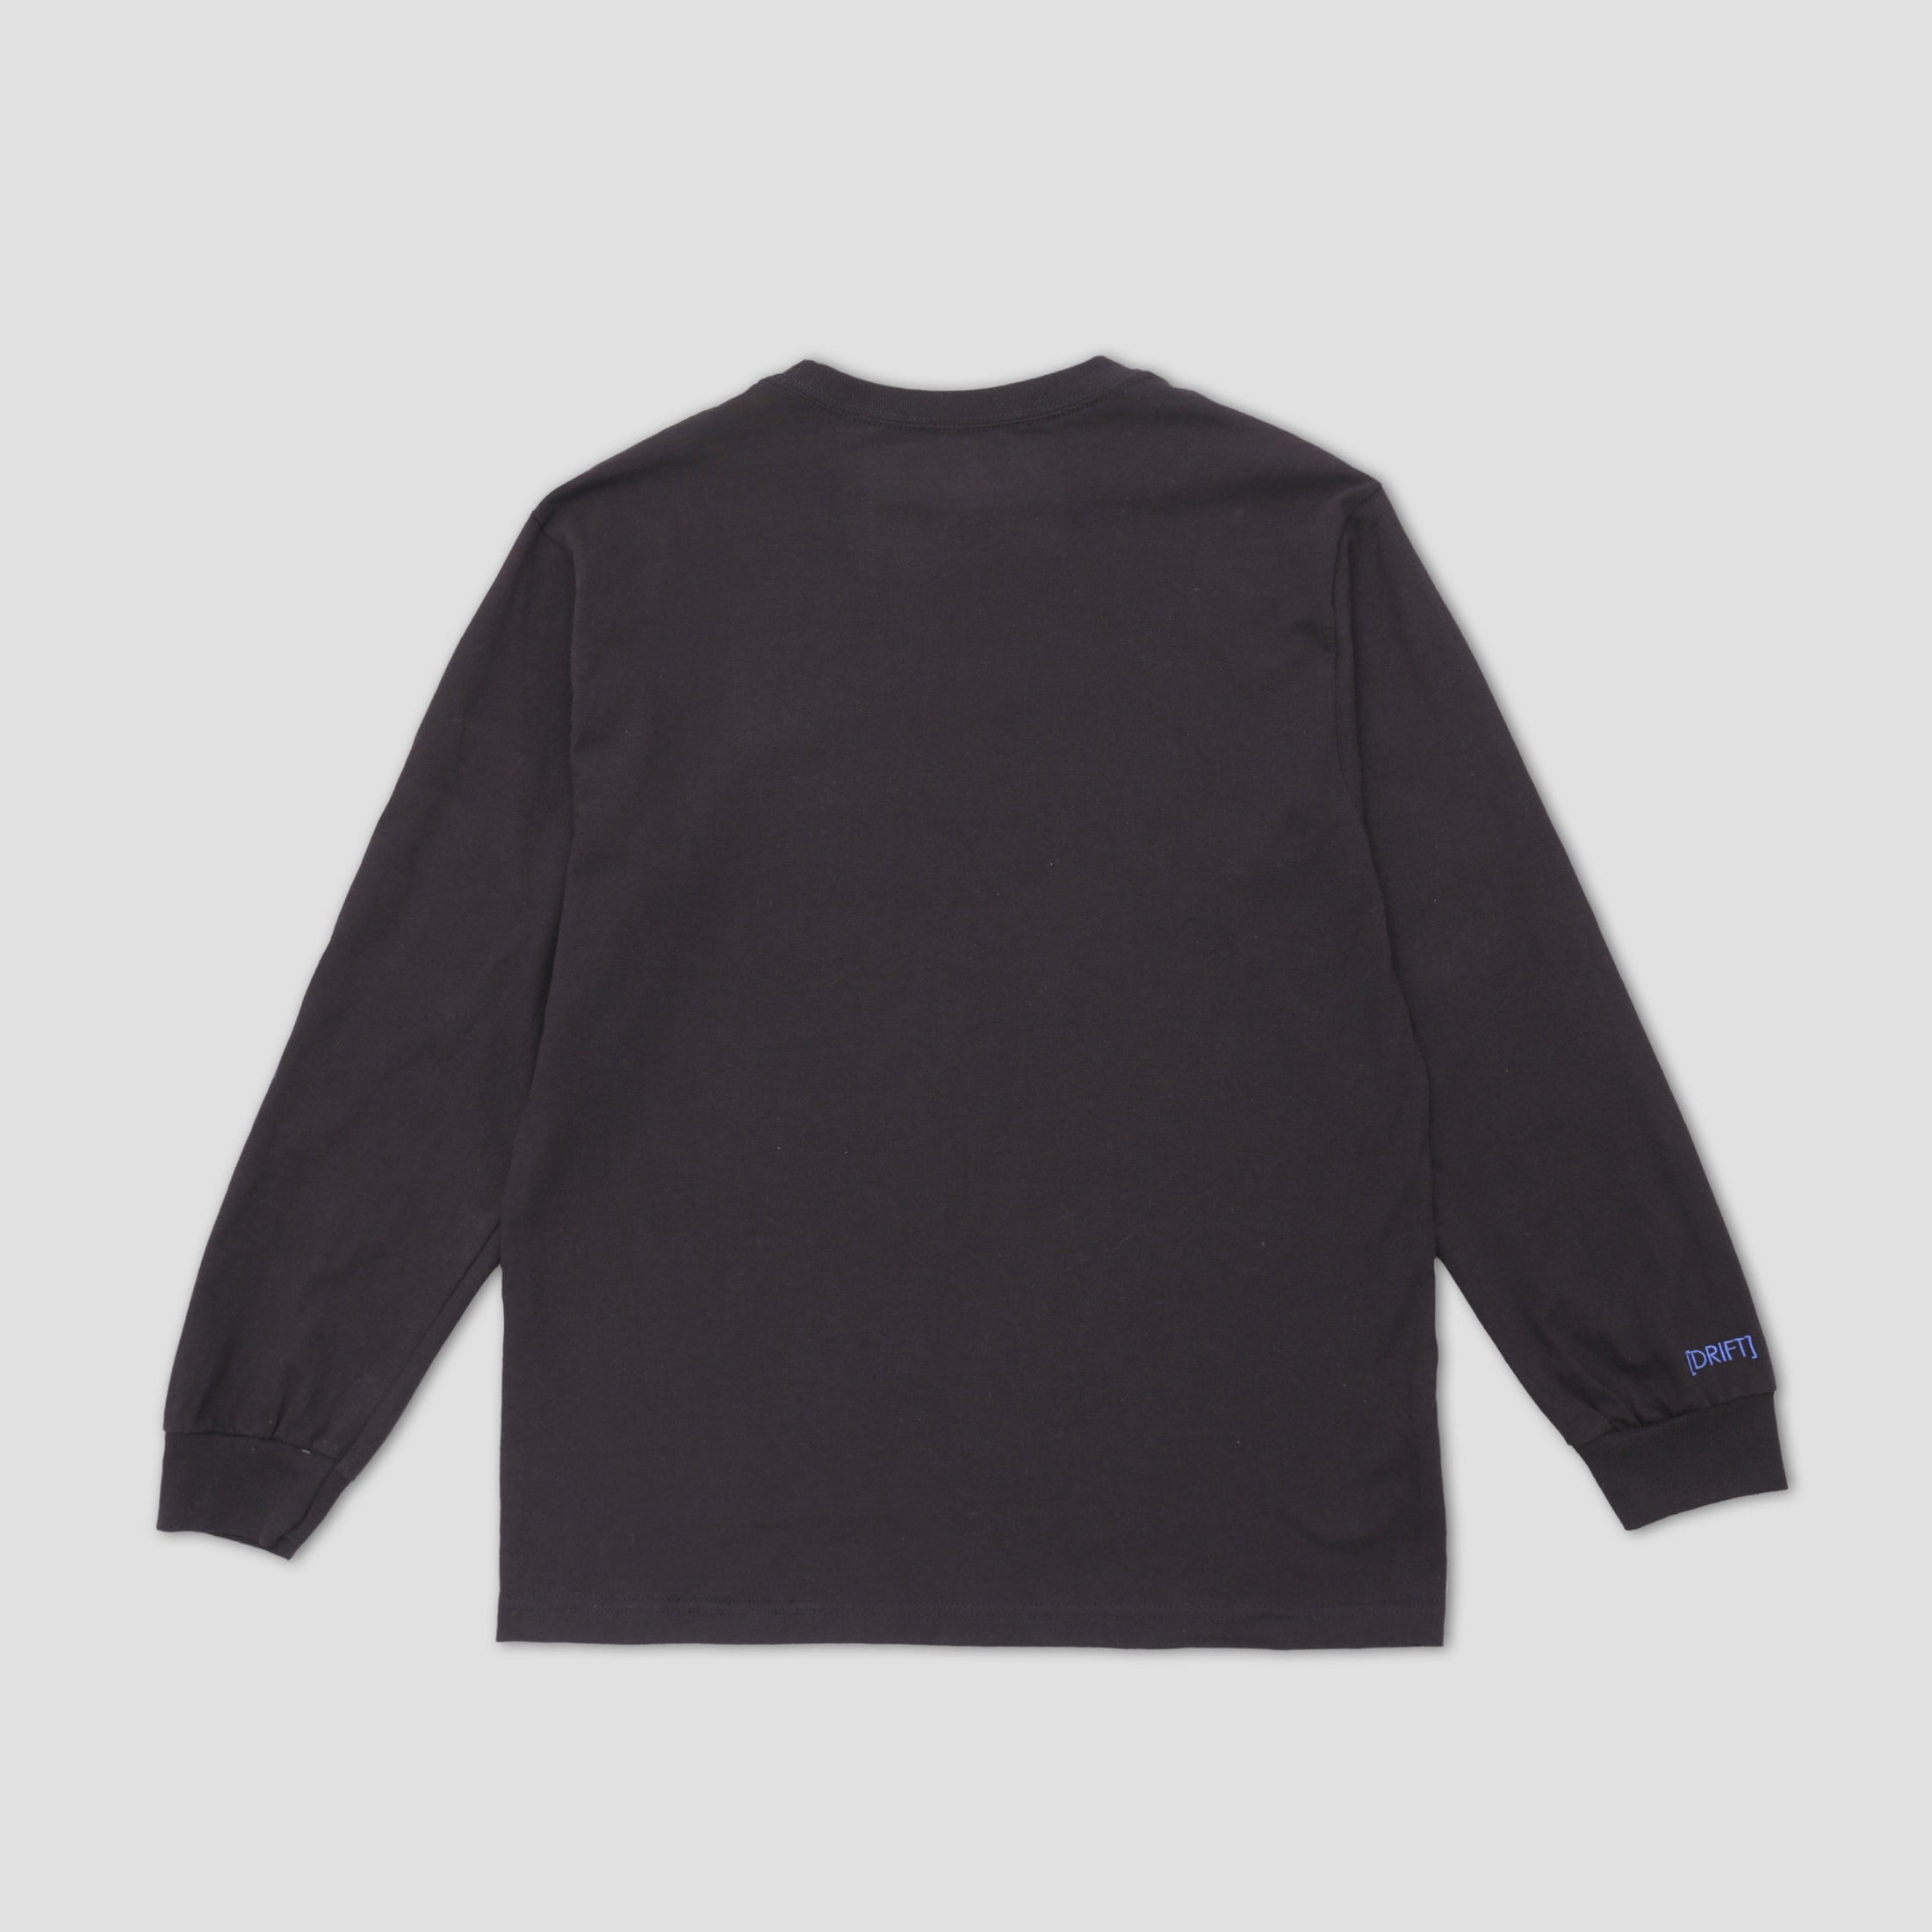 Atlantic Drift Long Sleeve T-Shirt Black